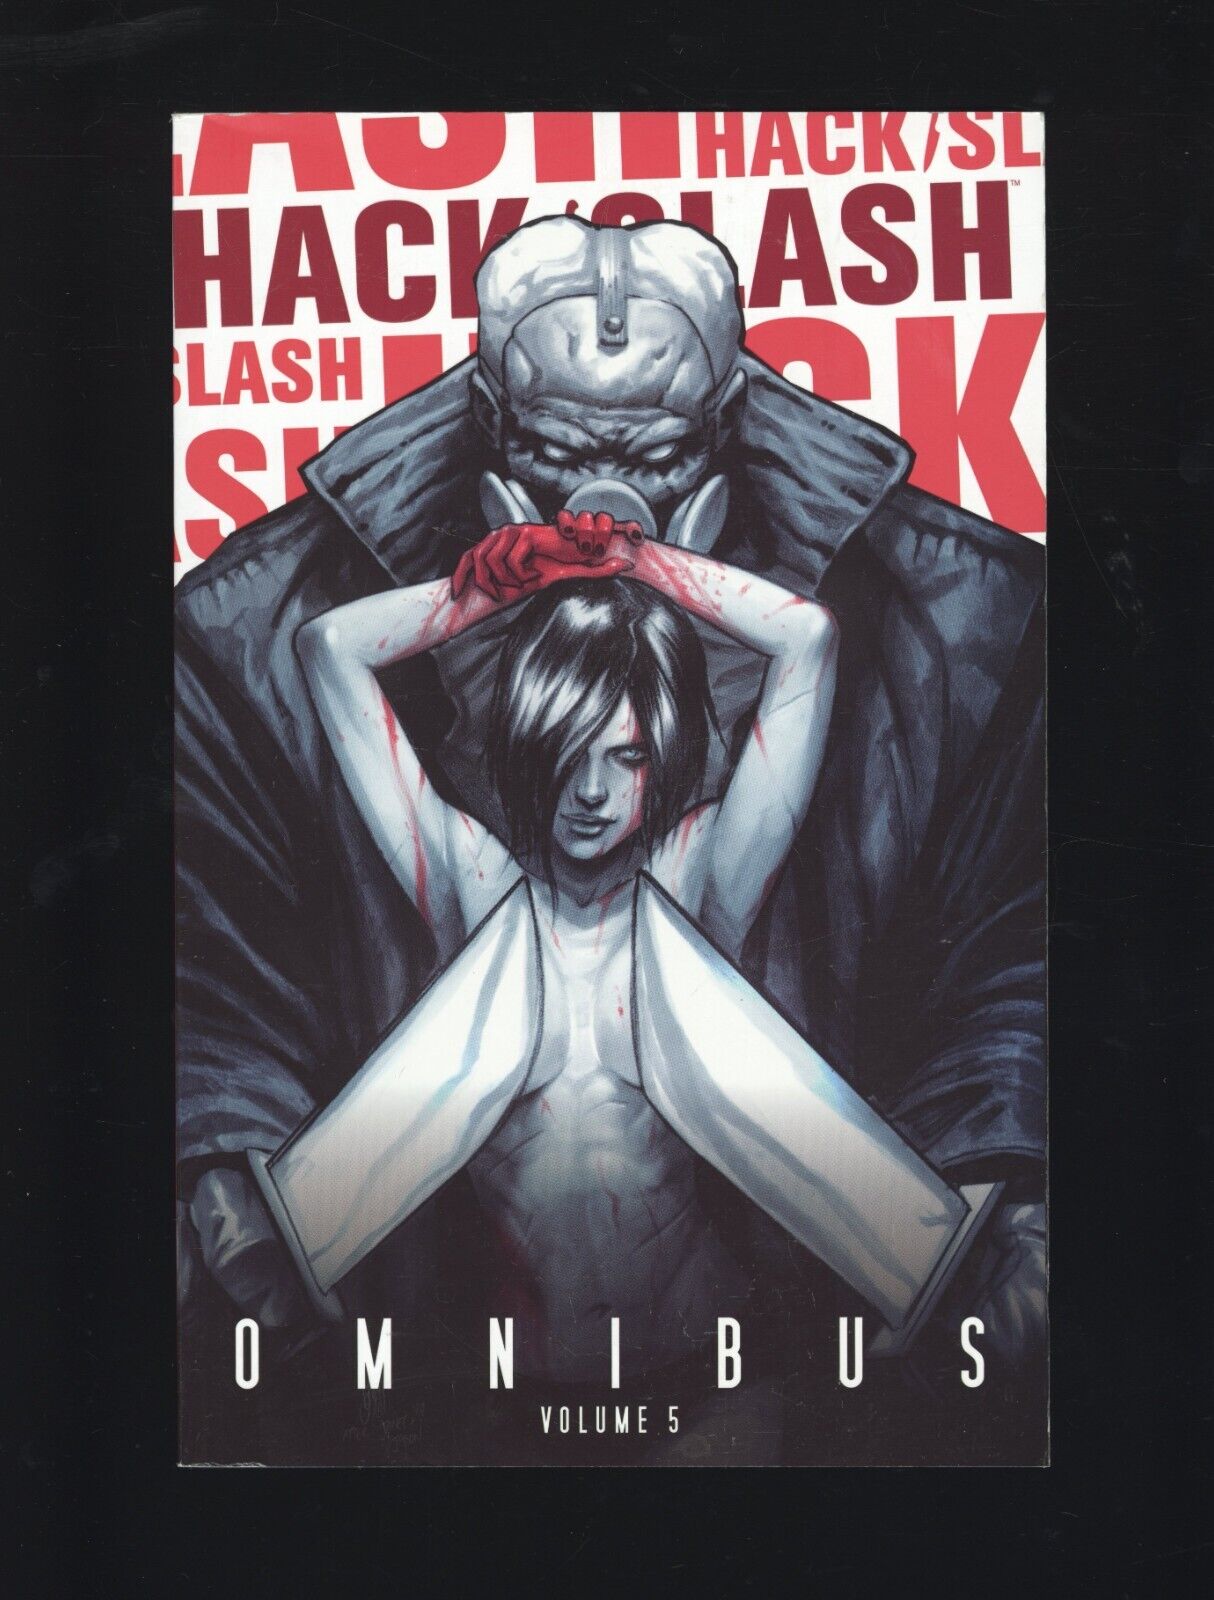 Hack/Slash Omnibus Vol 5 Softcover TPB Graphic Novel #143B